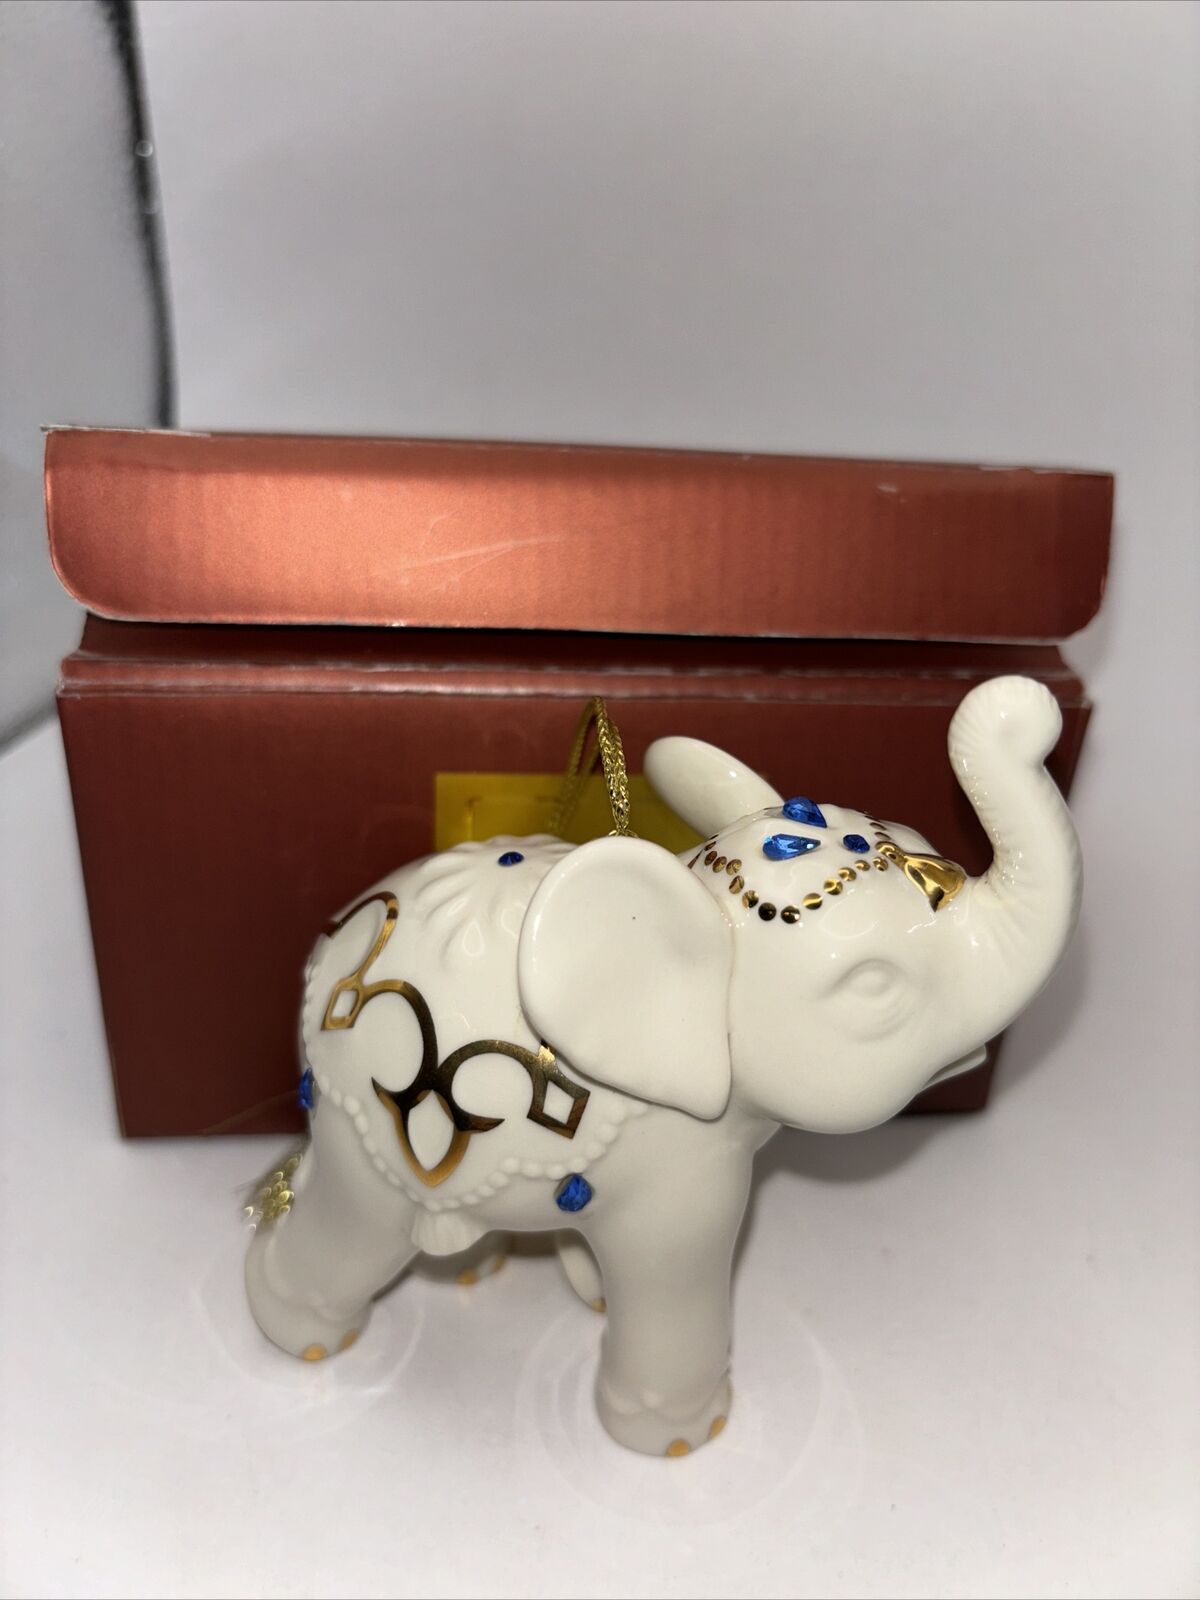 LENOX ENCHANTED ELEPHANT LAVISH DESIGNS + ADORNED WITH BLUE CRYSTALS + 24K GOLD